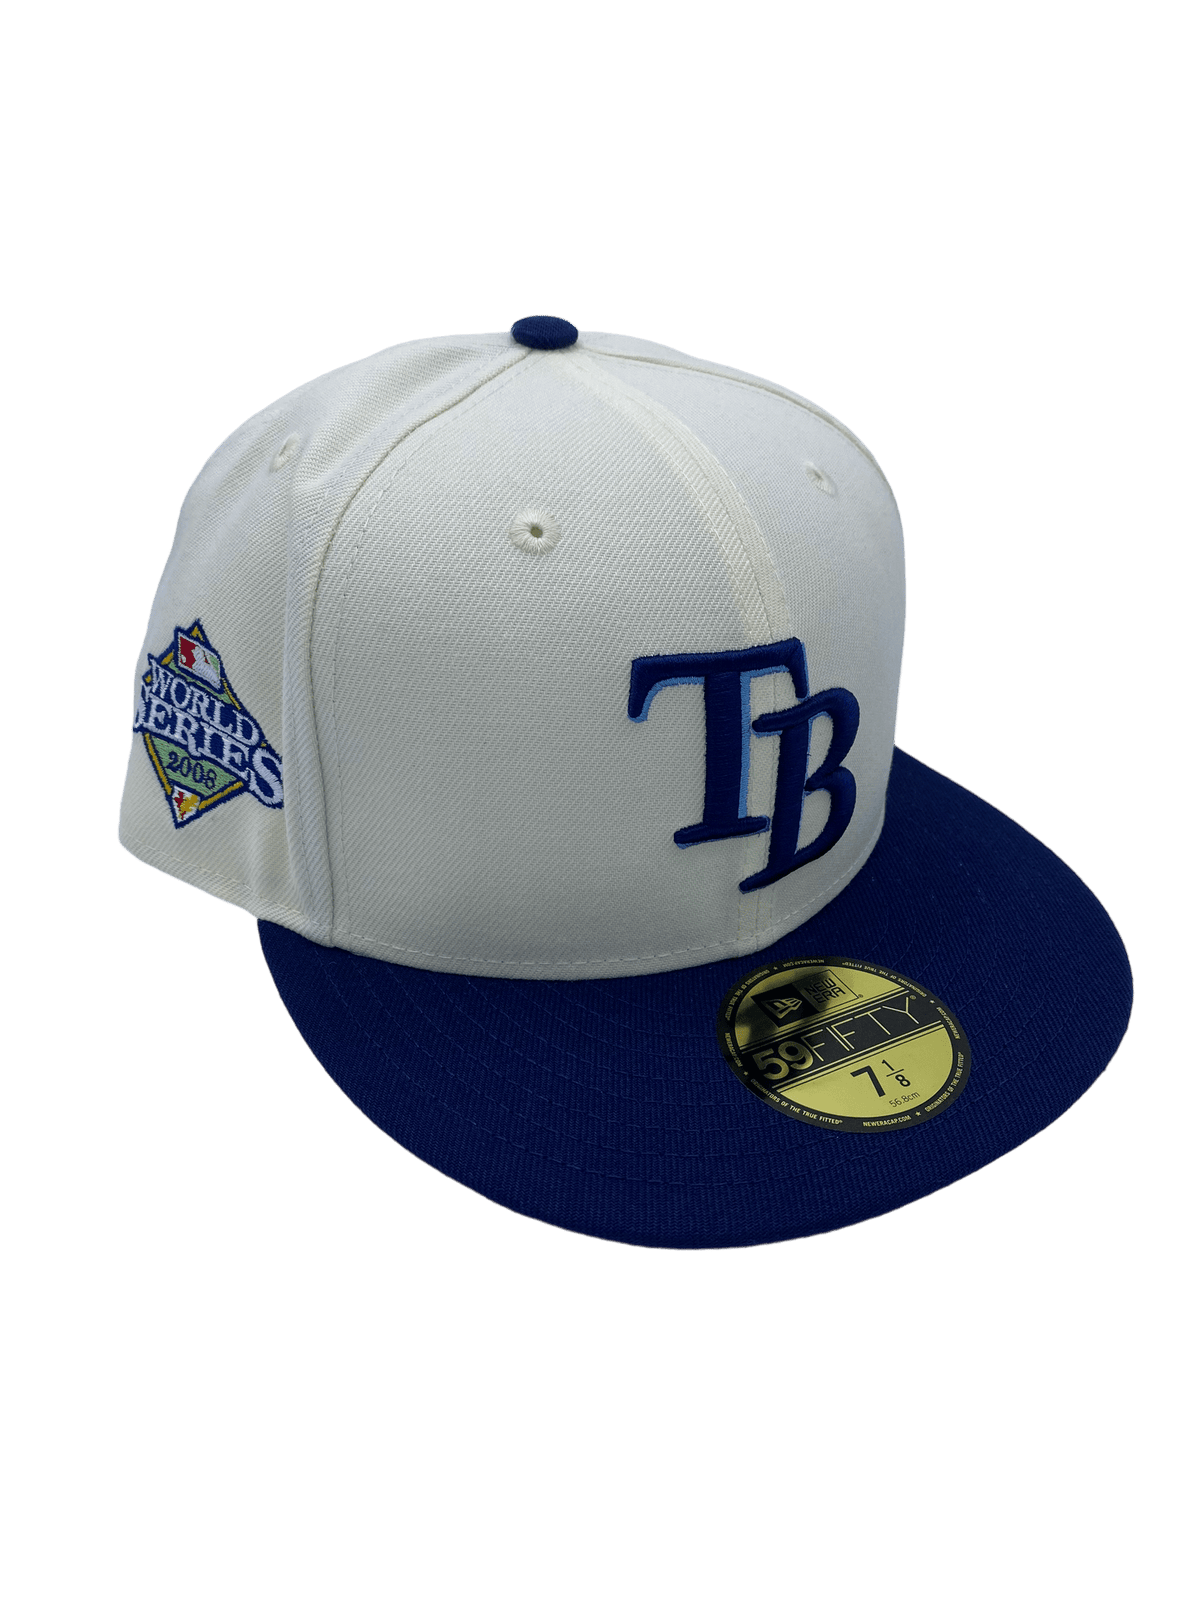 Tampa Bay Rays Throwback Jerseys, Vintage MLB Gear